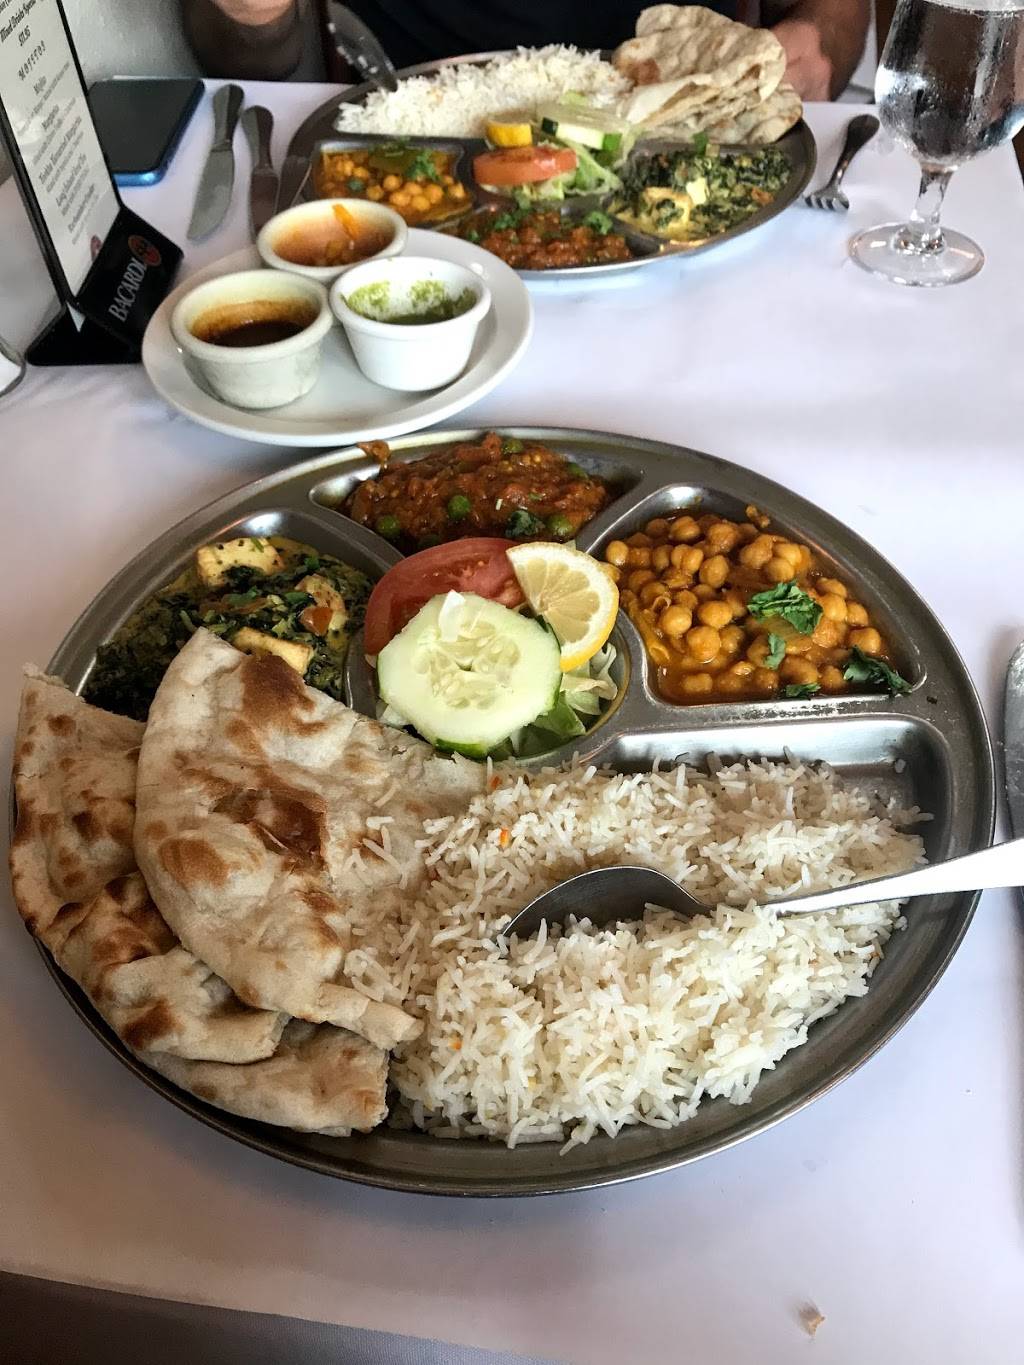 Taj of India Cuisine | 2809 M St NW, Washington, DC 20007, USA | Phone: (202) 965-4266